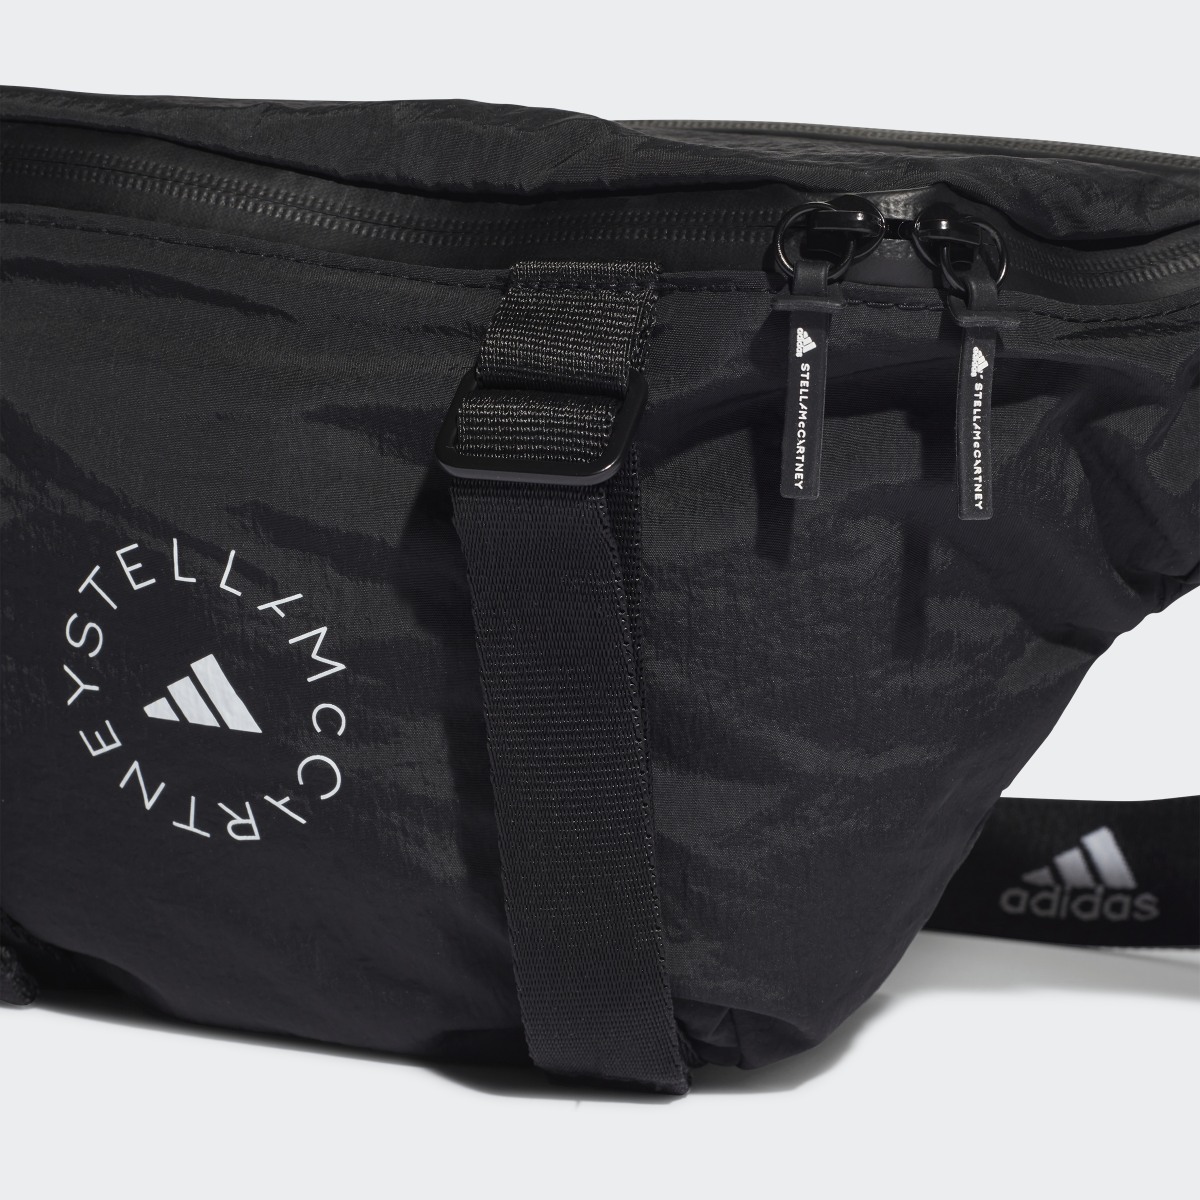 Adidas by Stella McCartney Convertible Bum Bag. 6